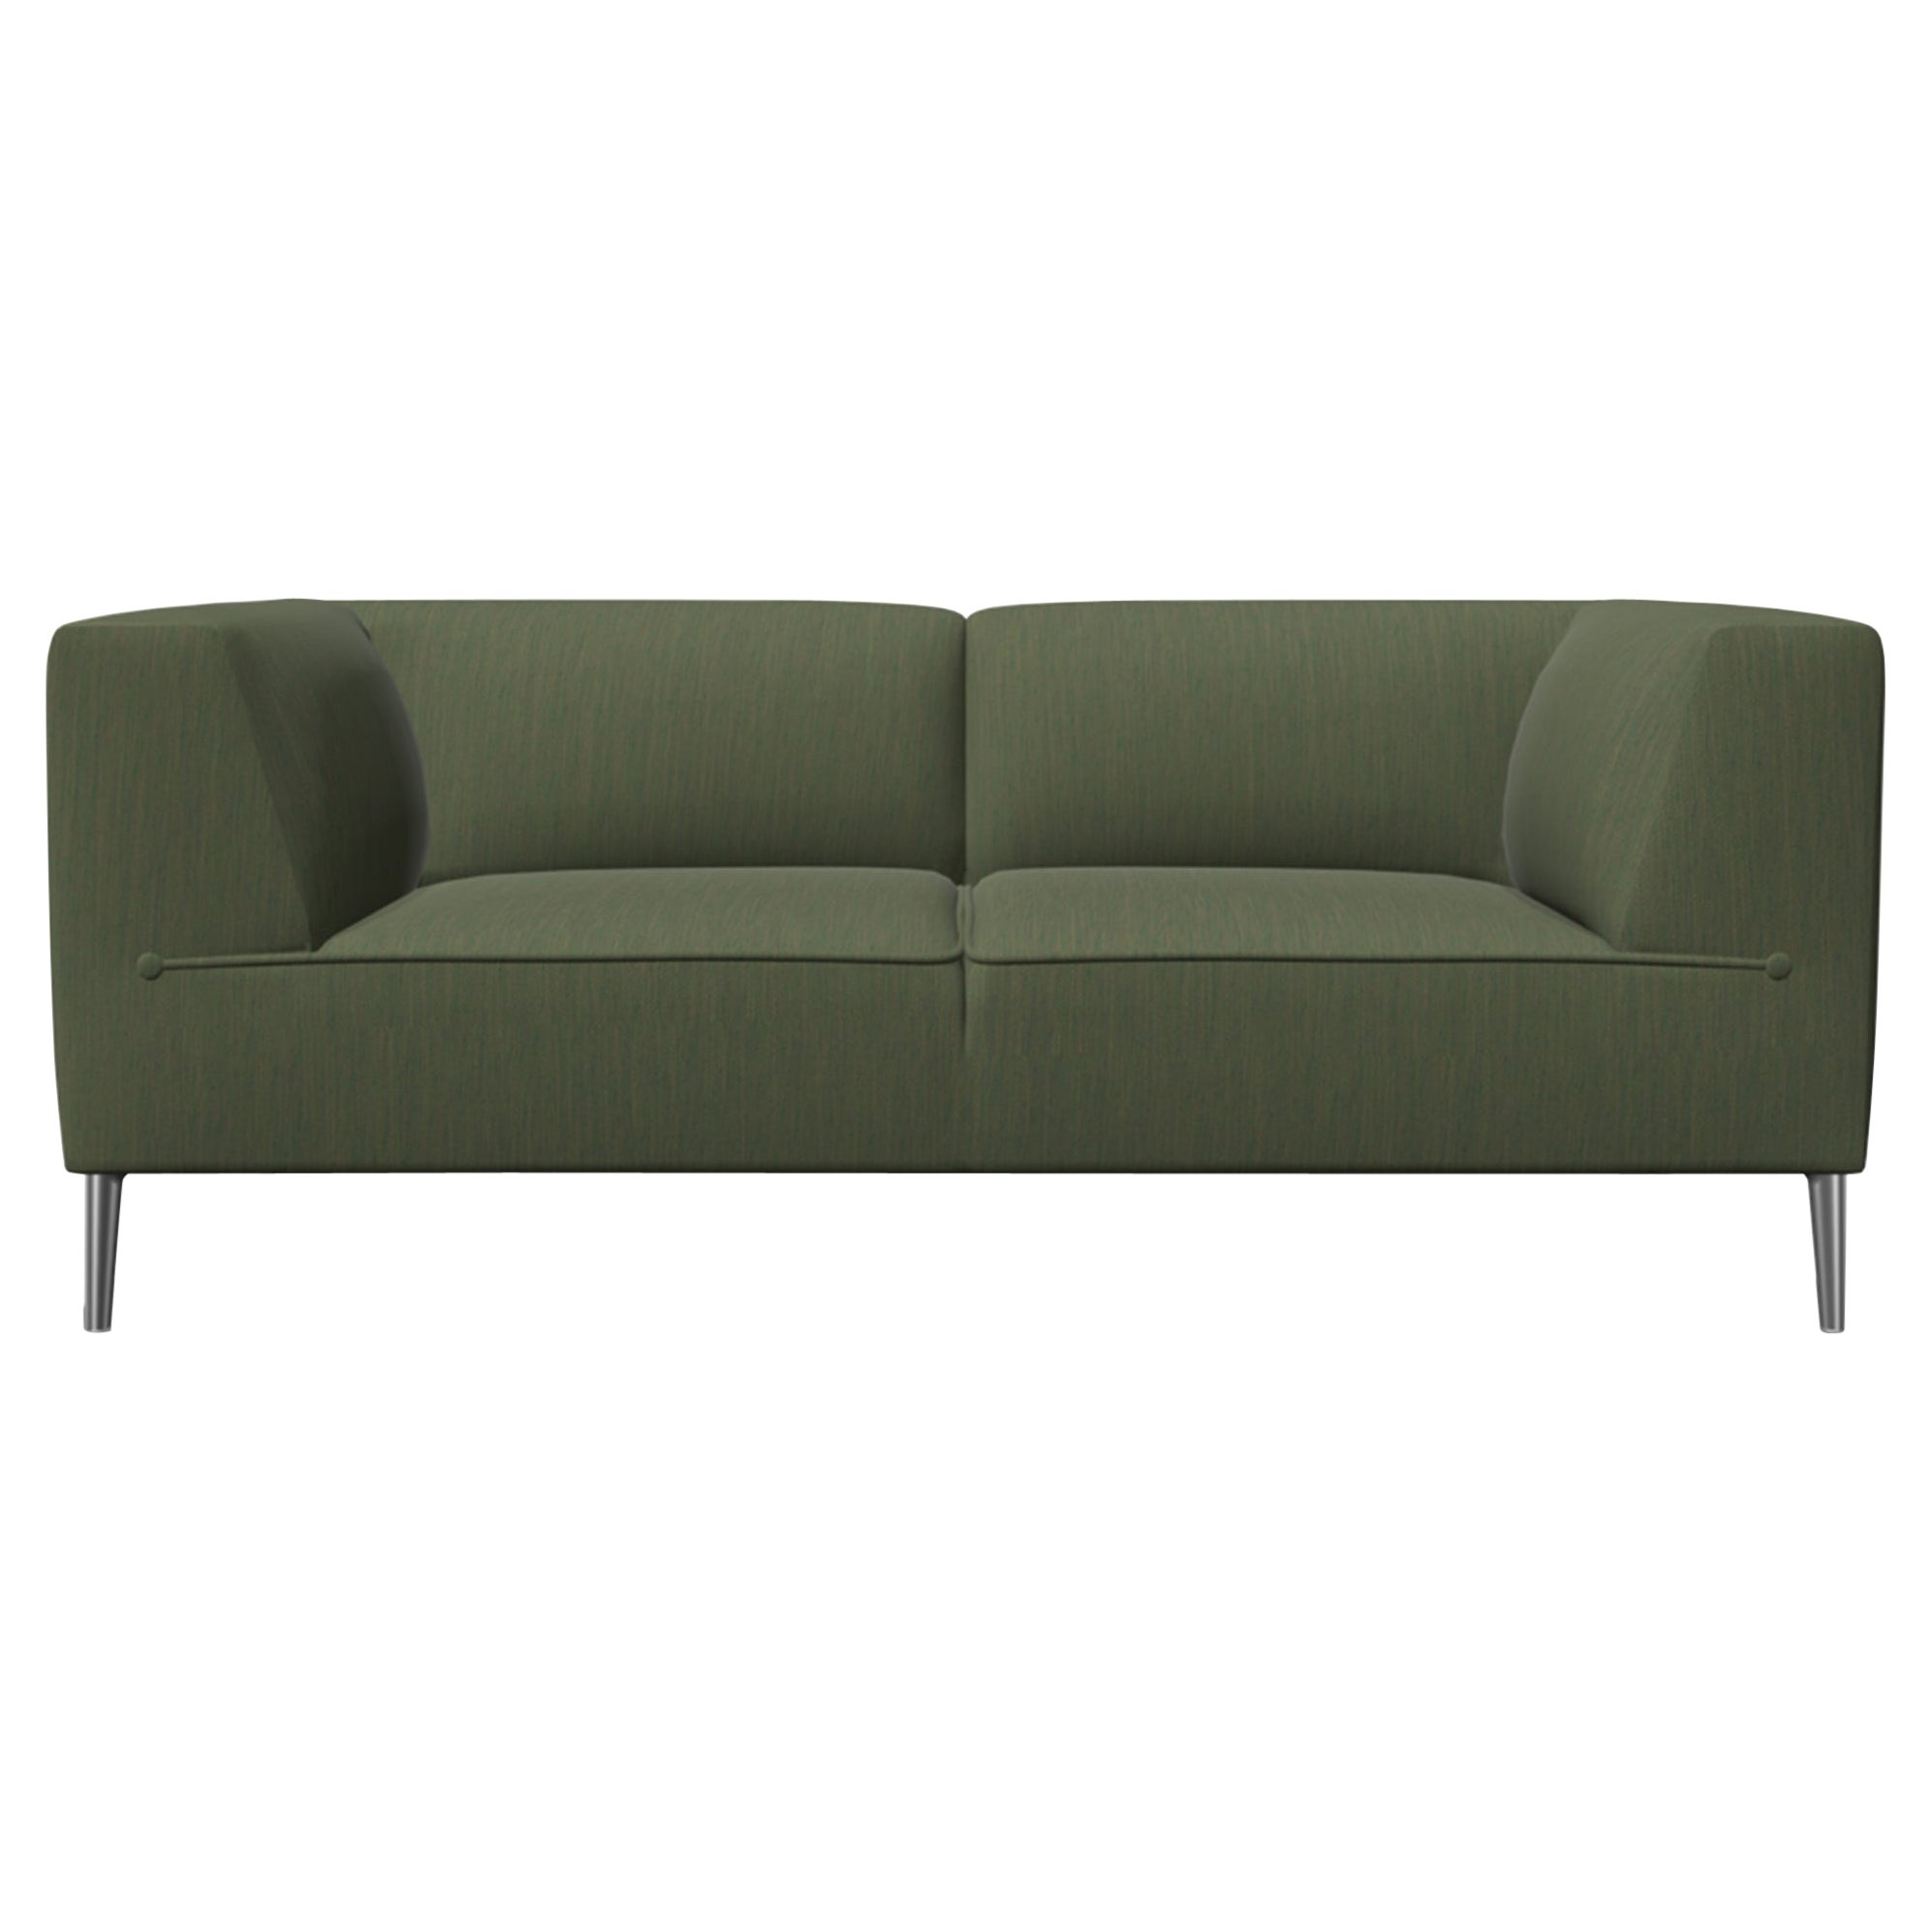 Moooi Double Seat Sofa So Good in Justo Alge Upholstery & Polished Aluminum Feet